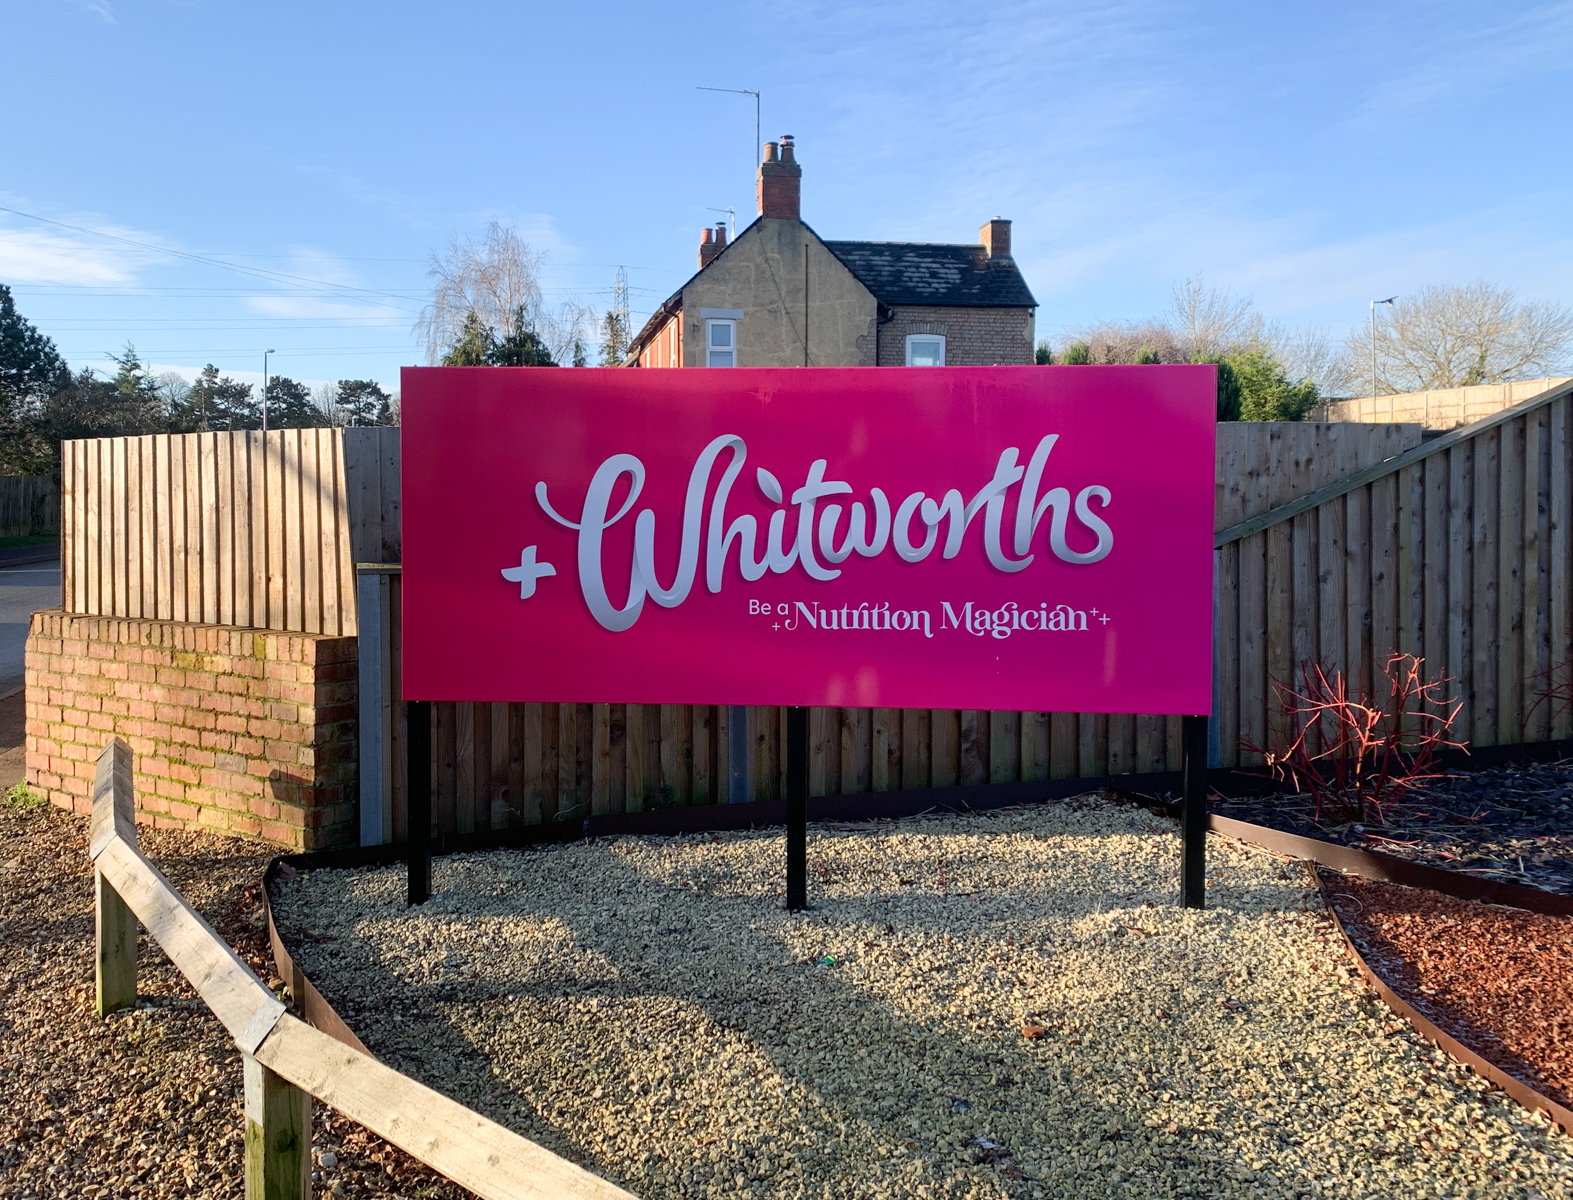 Whitworths signage